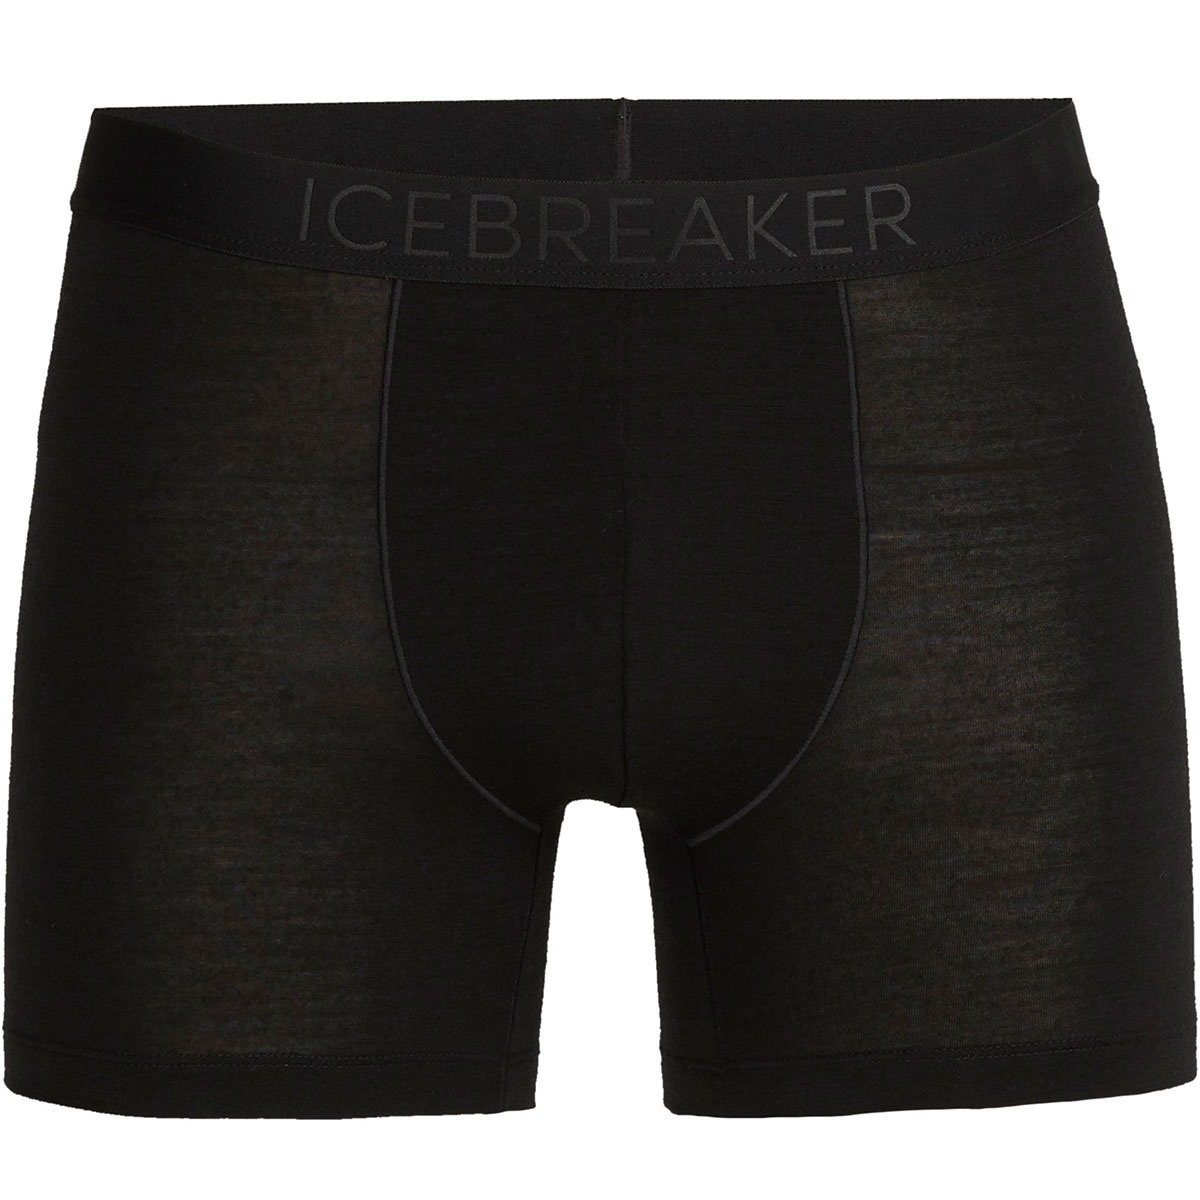 Icebreaker Herren Anatomica Cool-Lite Boxershorts von Icebreaker